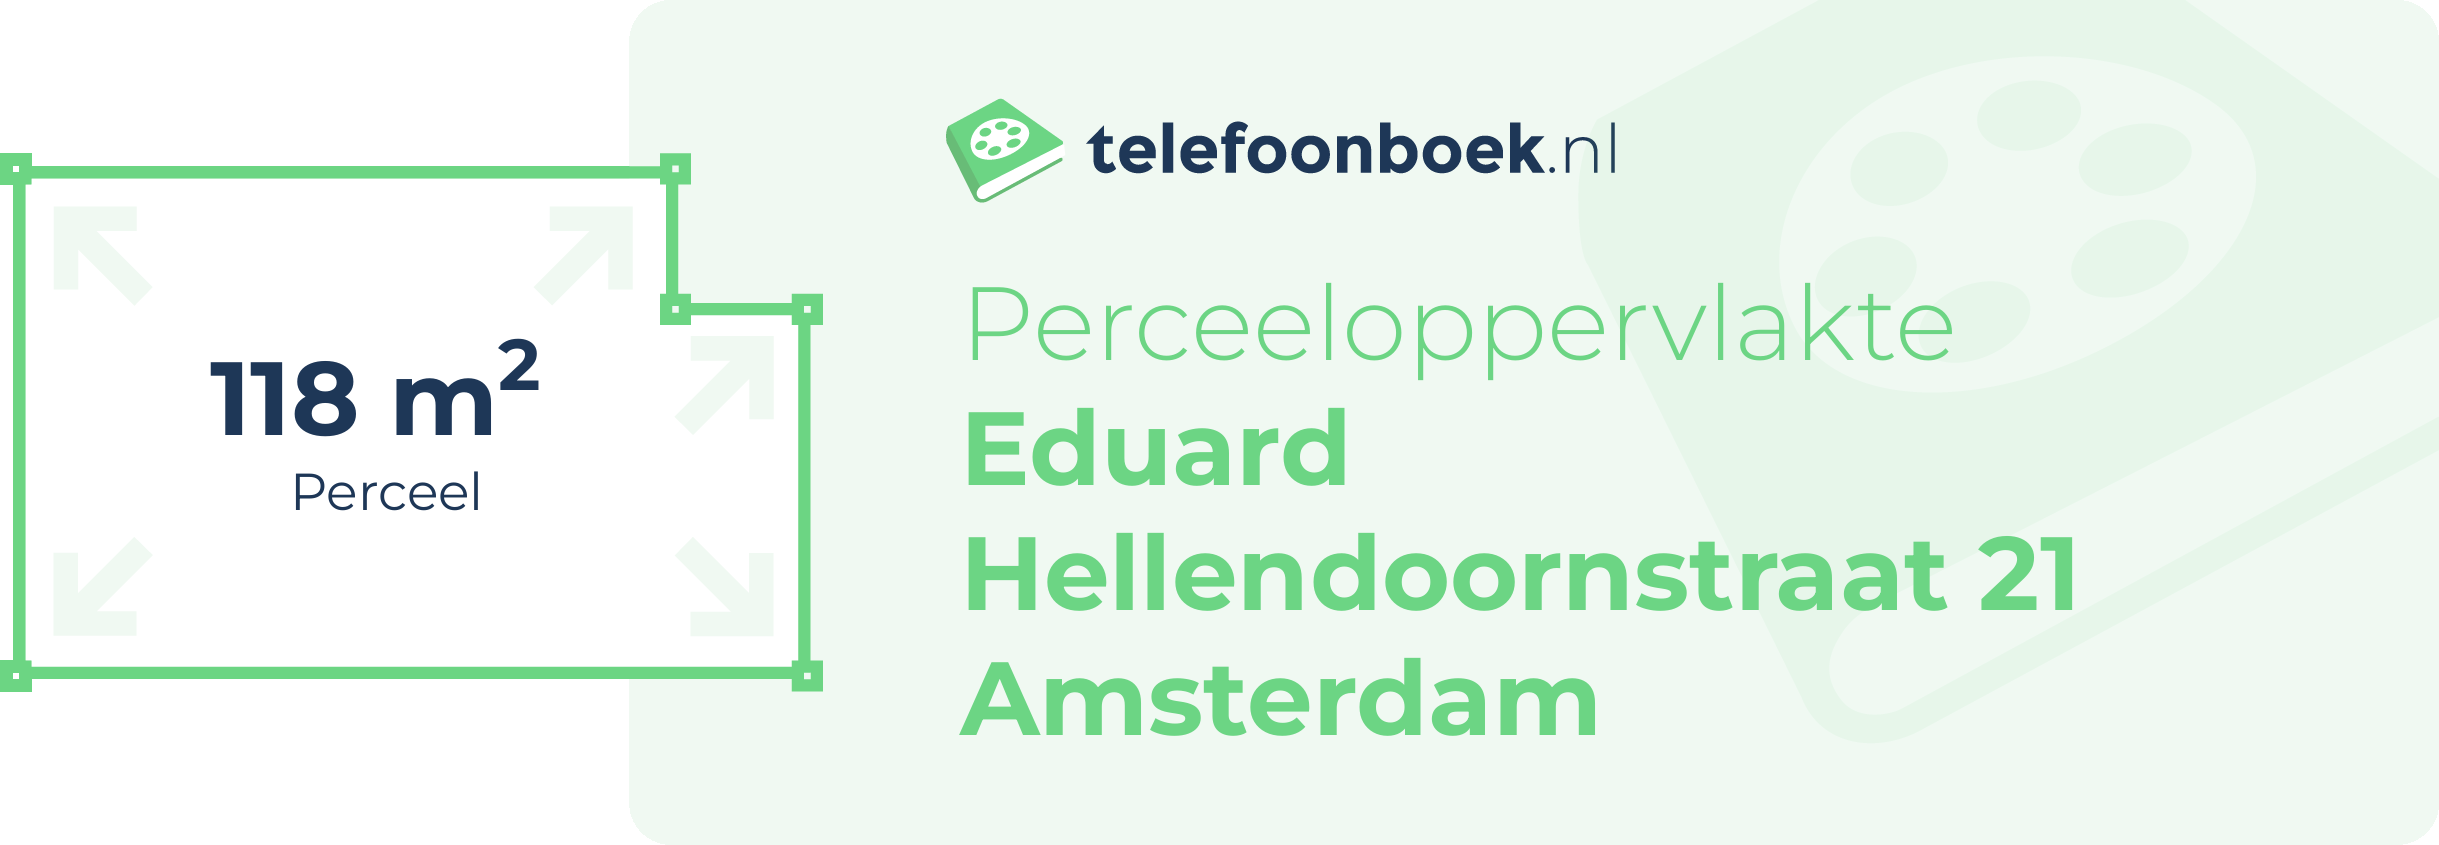 Perceeloppervlakte Eduard Hellendoornstraat 21 Amsterdam